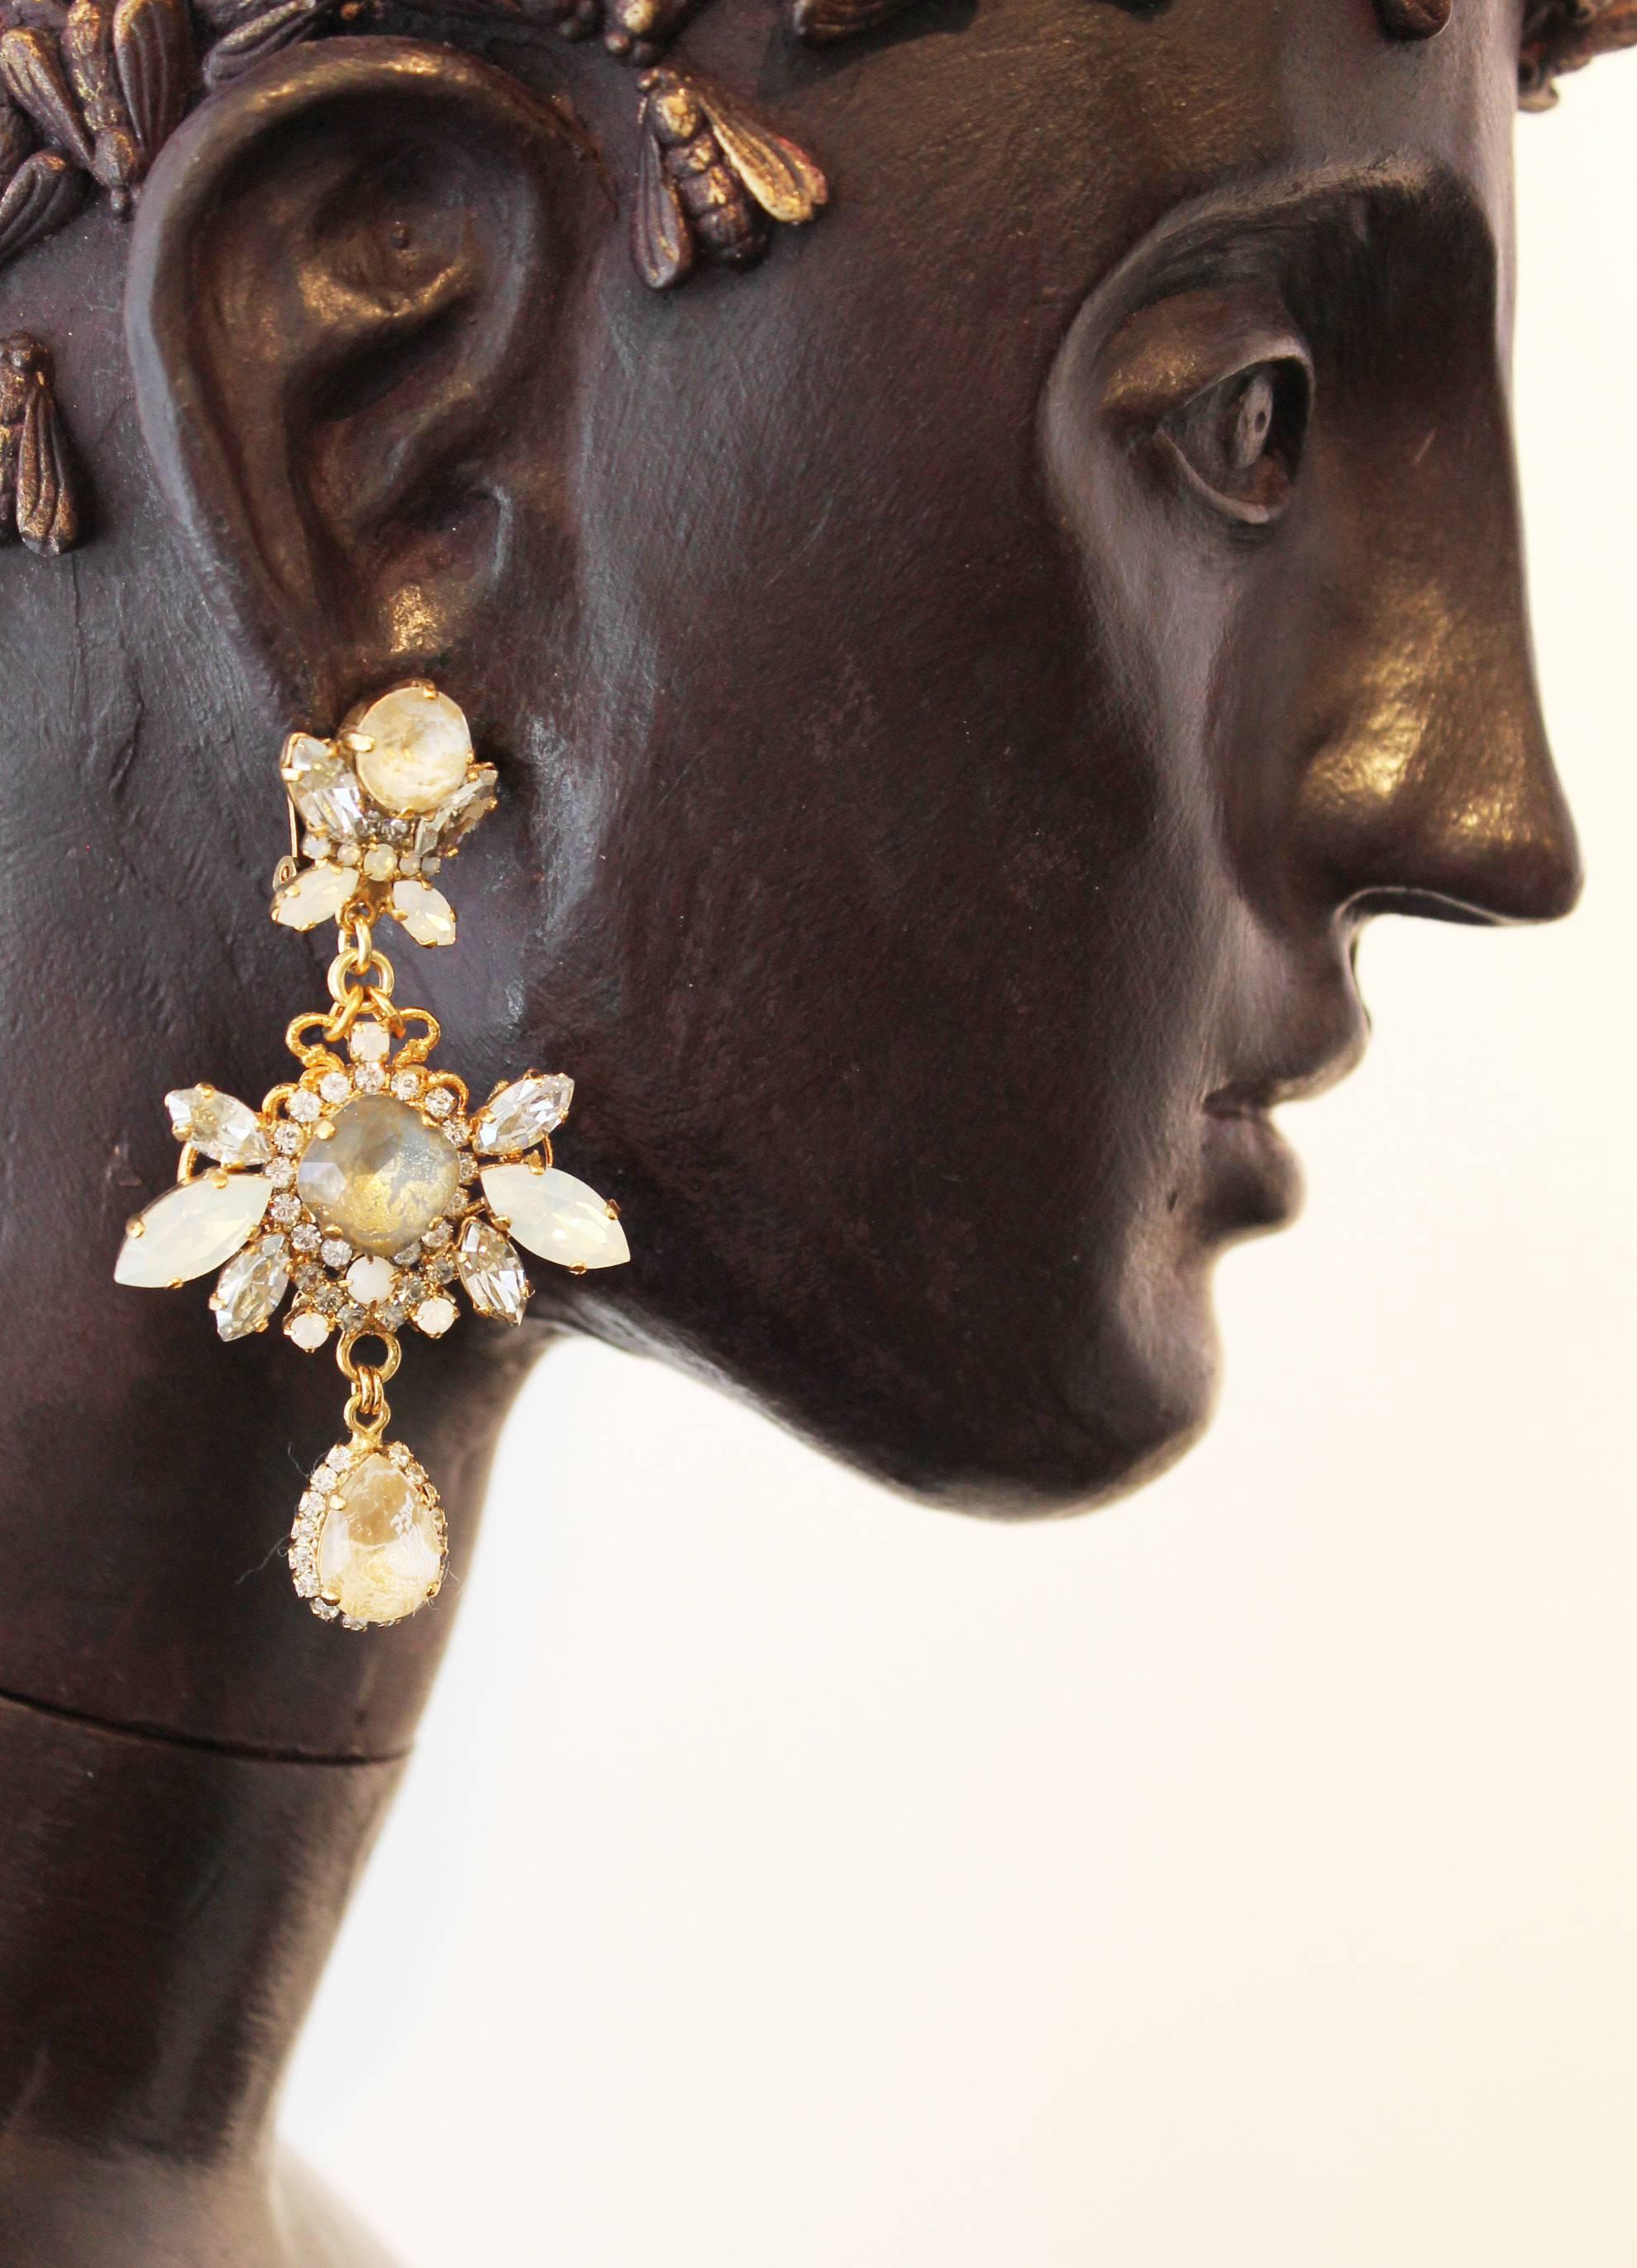 21st Centruy Modern Gold-Plated Swarovski Statement Earrings For Sale 4